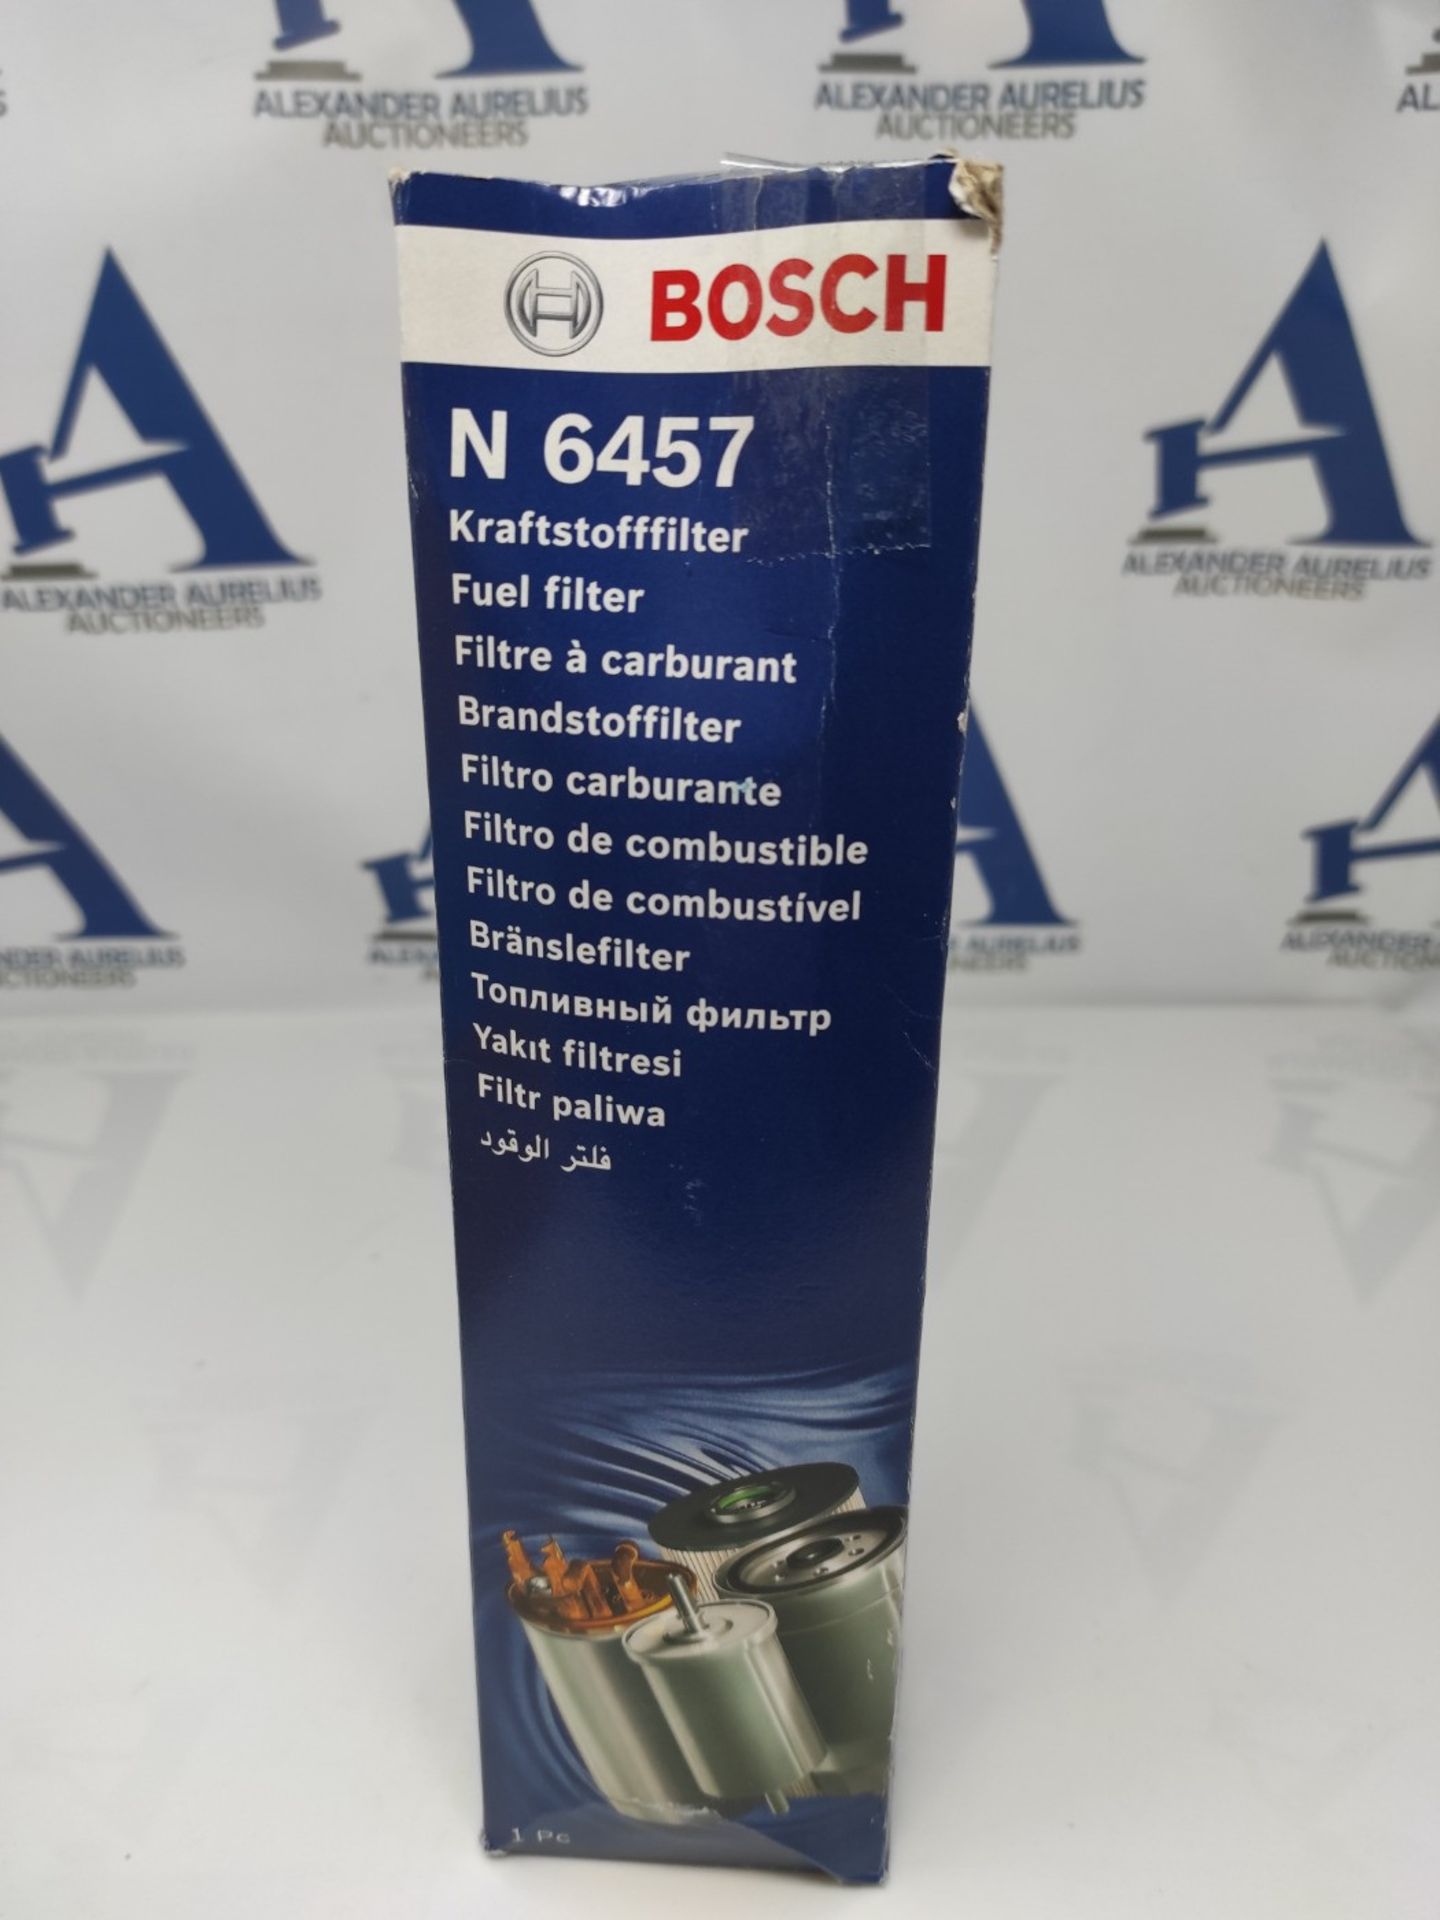 Bosch N6457 - Diesel Filter for Cars - Image 3 of 6